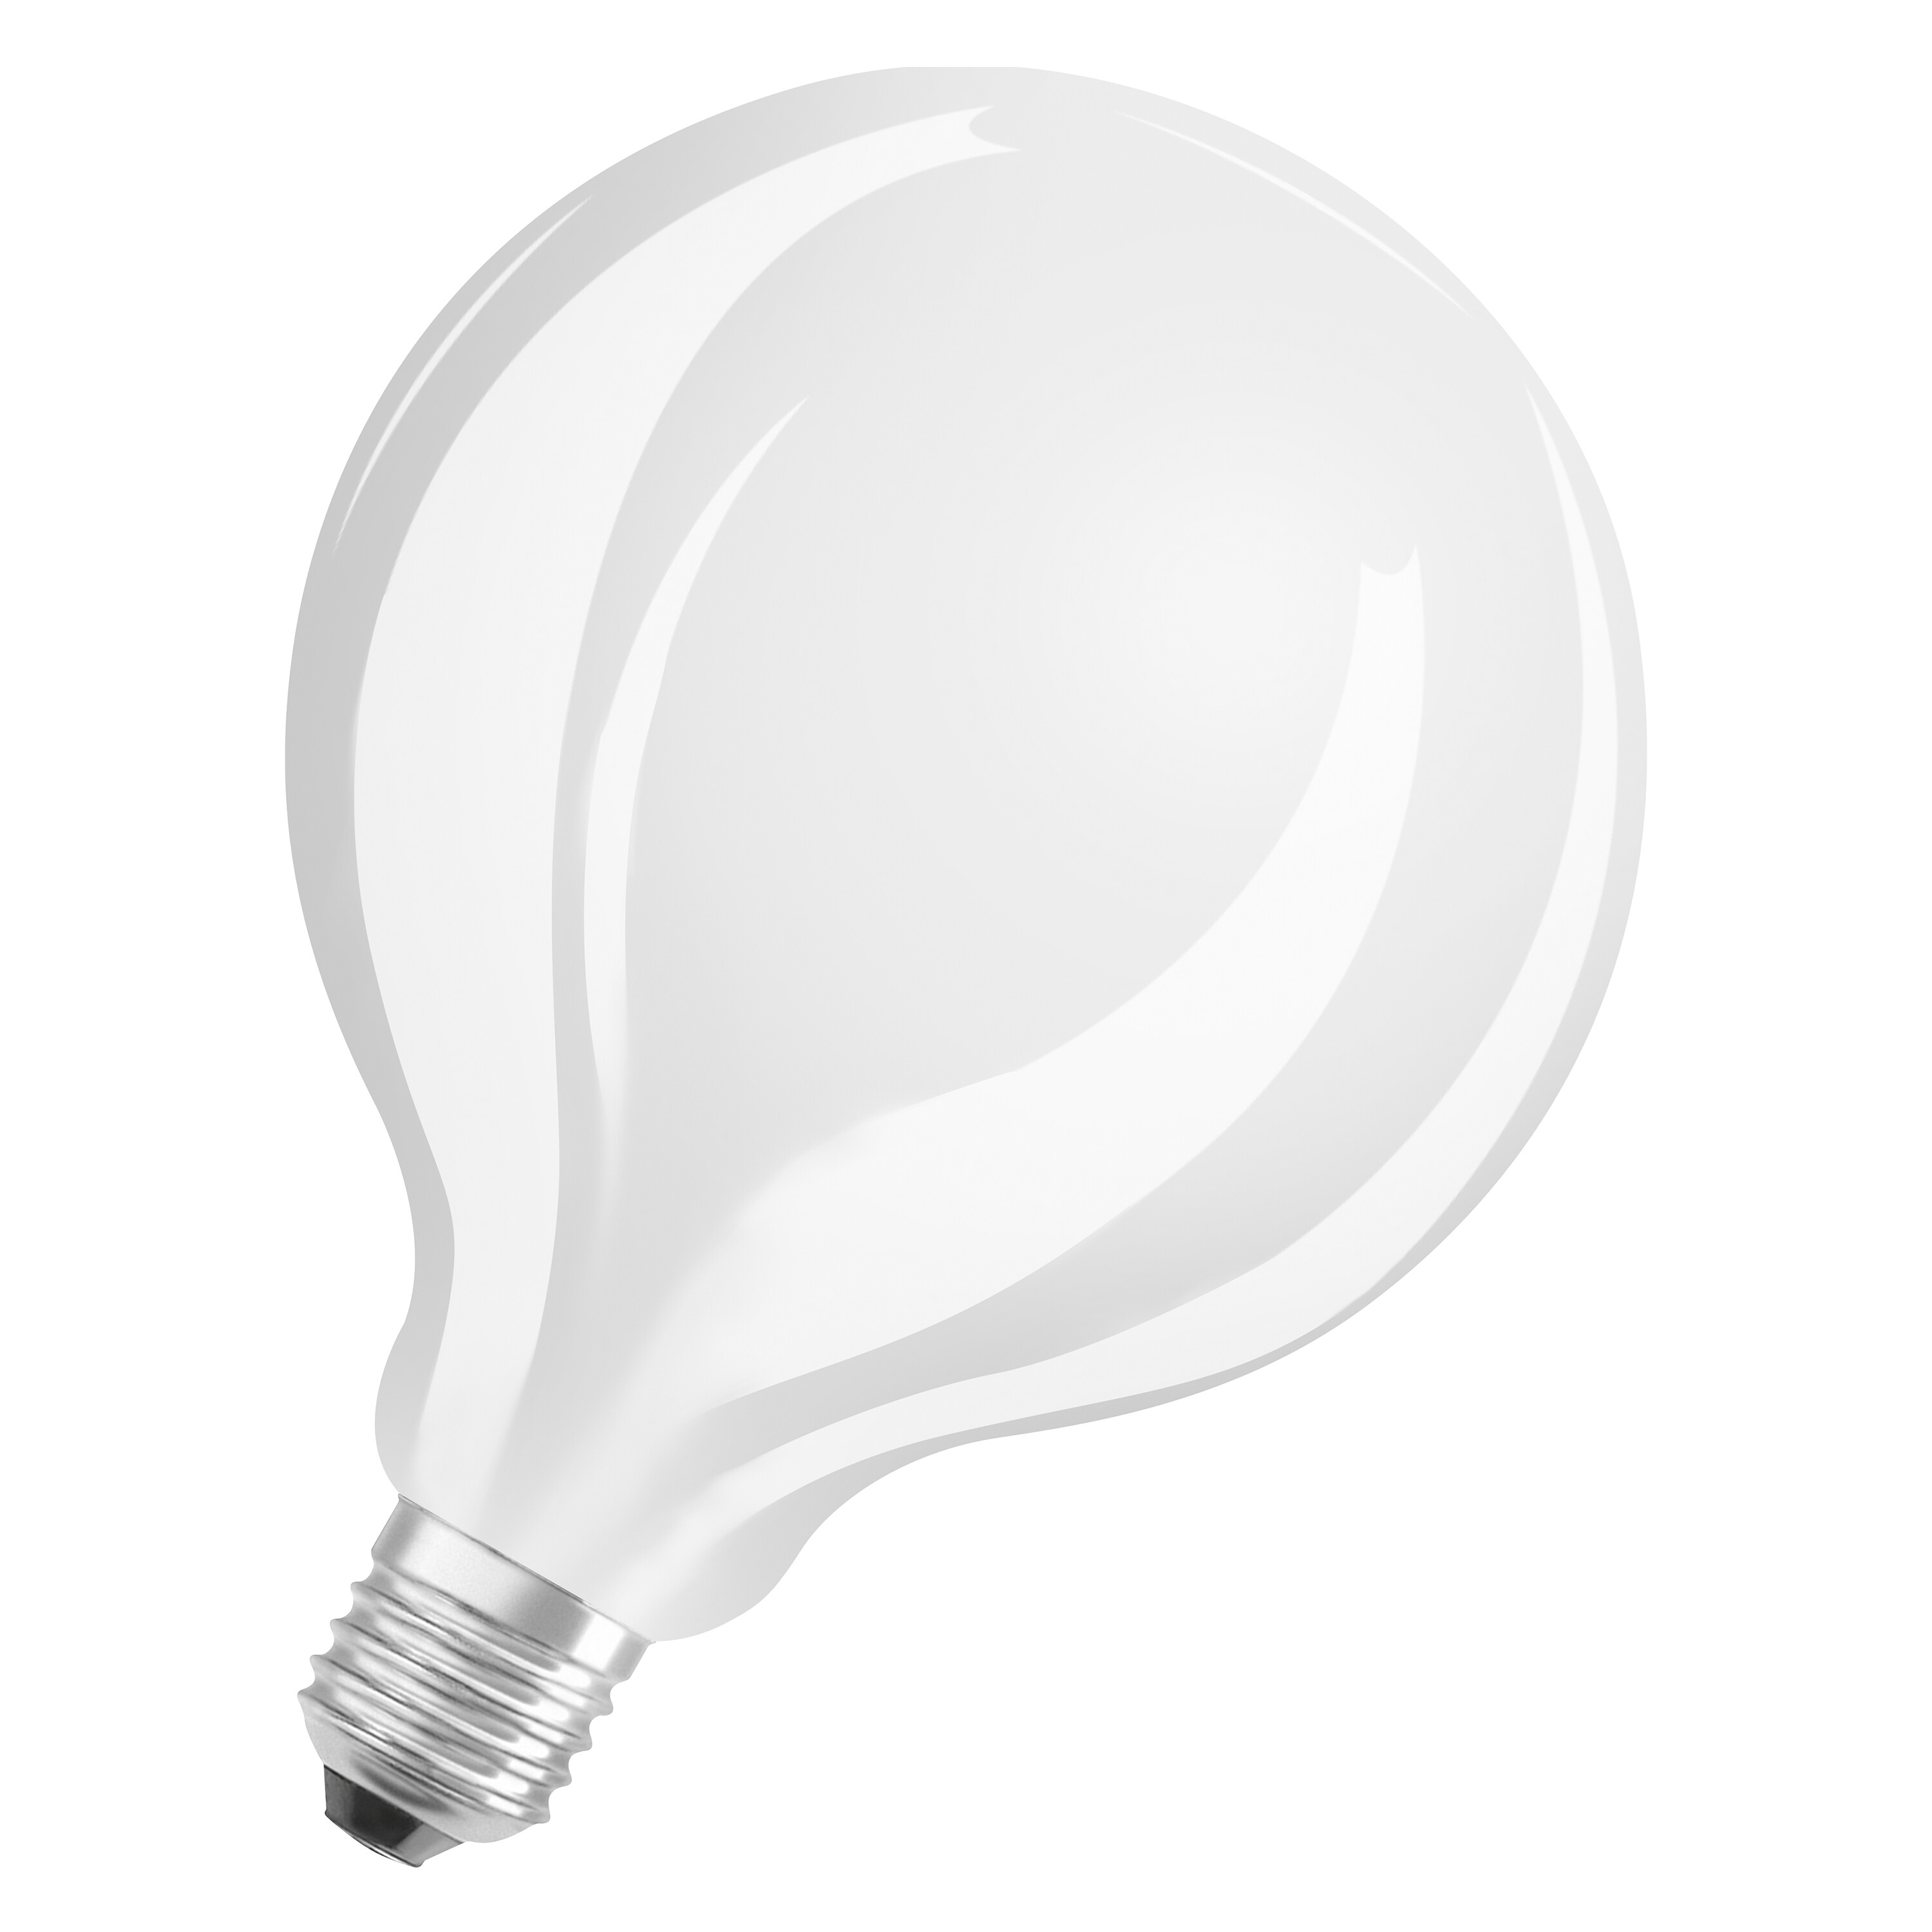 GLOBE125 CLASSIC LED 2452 lumen LED OSRAM  Warmweiß Lampe Retrofit